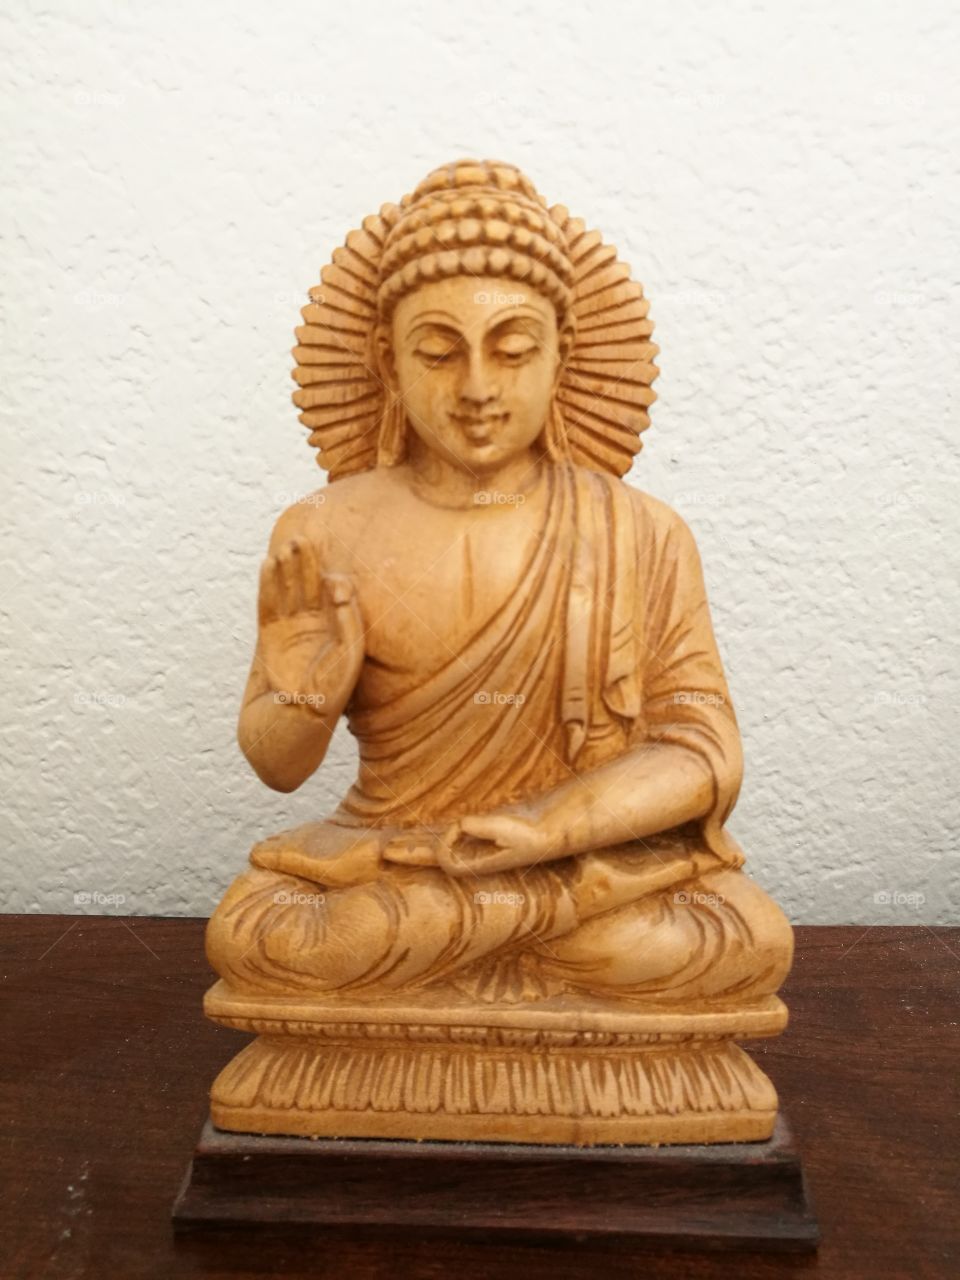 Japanese sitting Buddha statue on white wall background